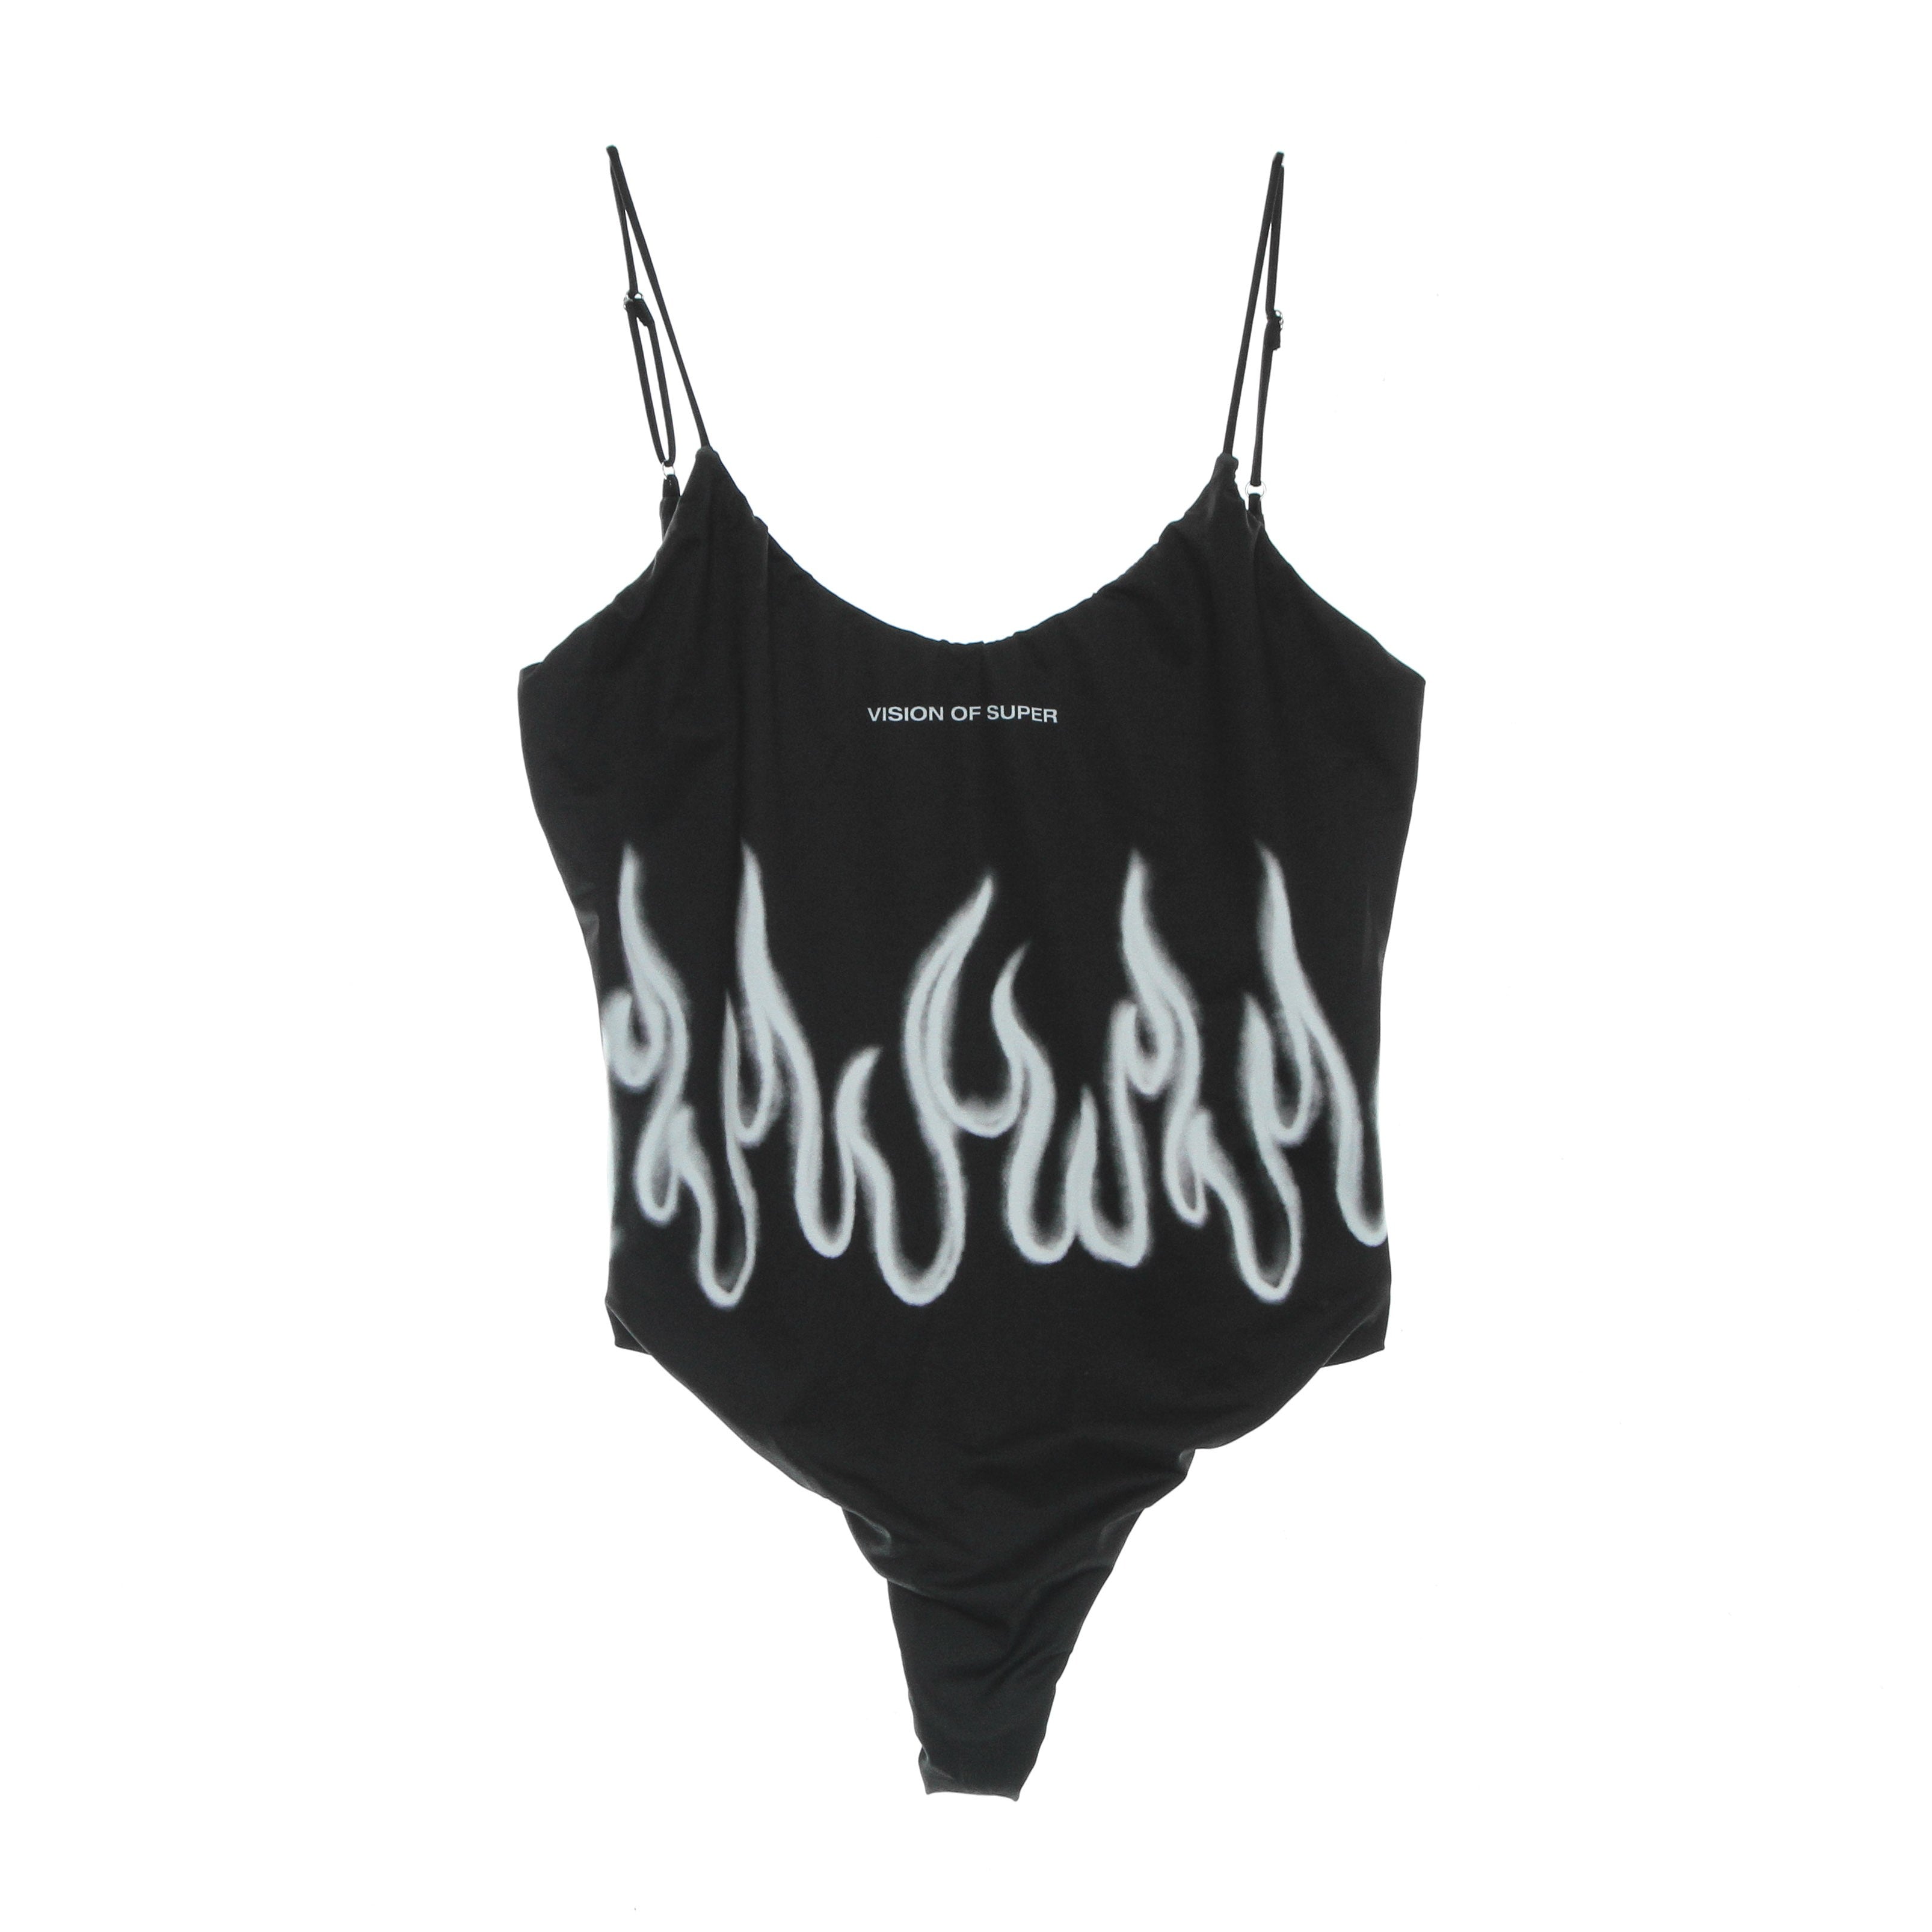 Spray Flames Swimwear Women's One-Piece Swimsuit